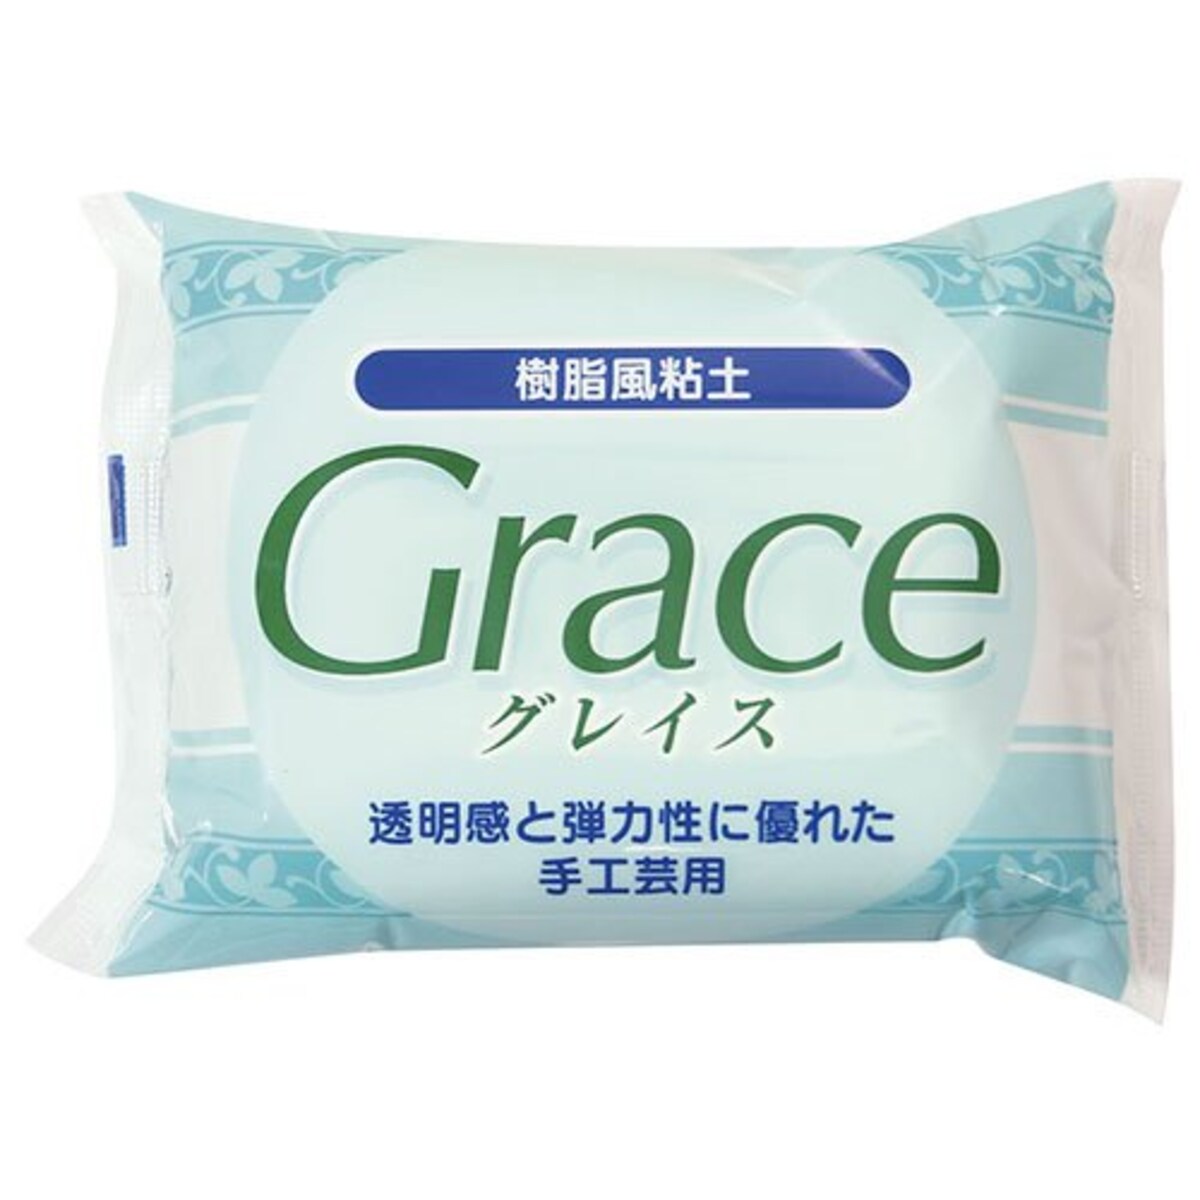 Grace（グレイス）